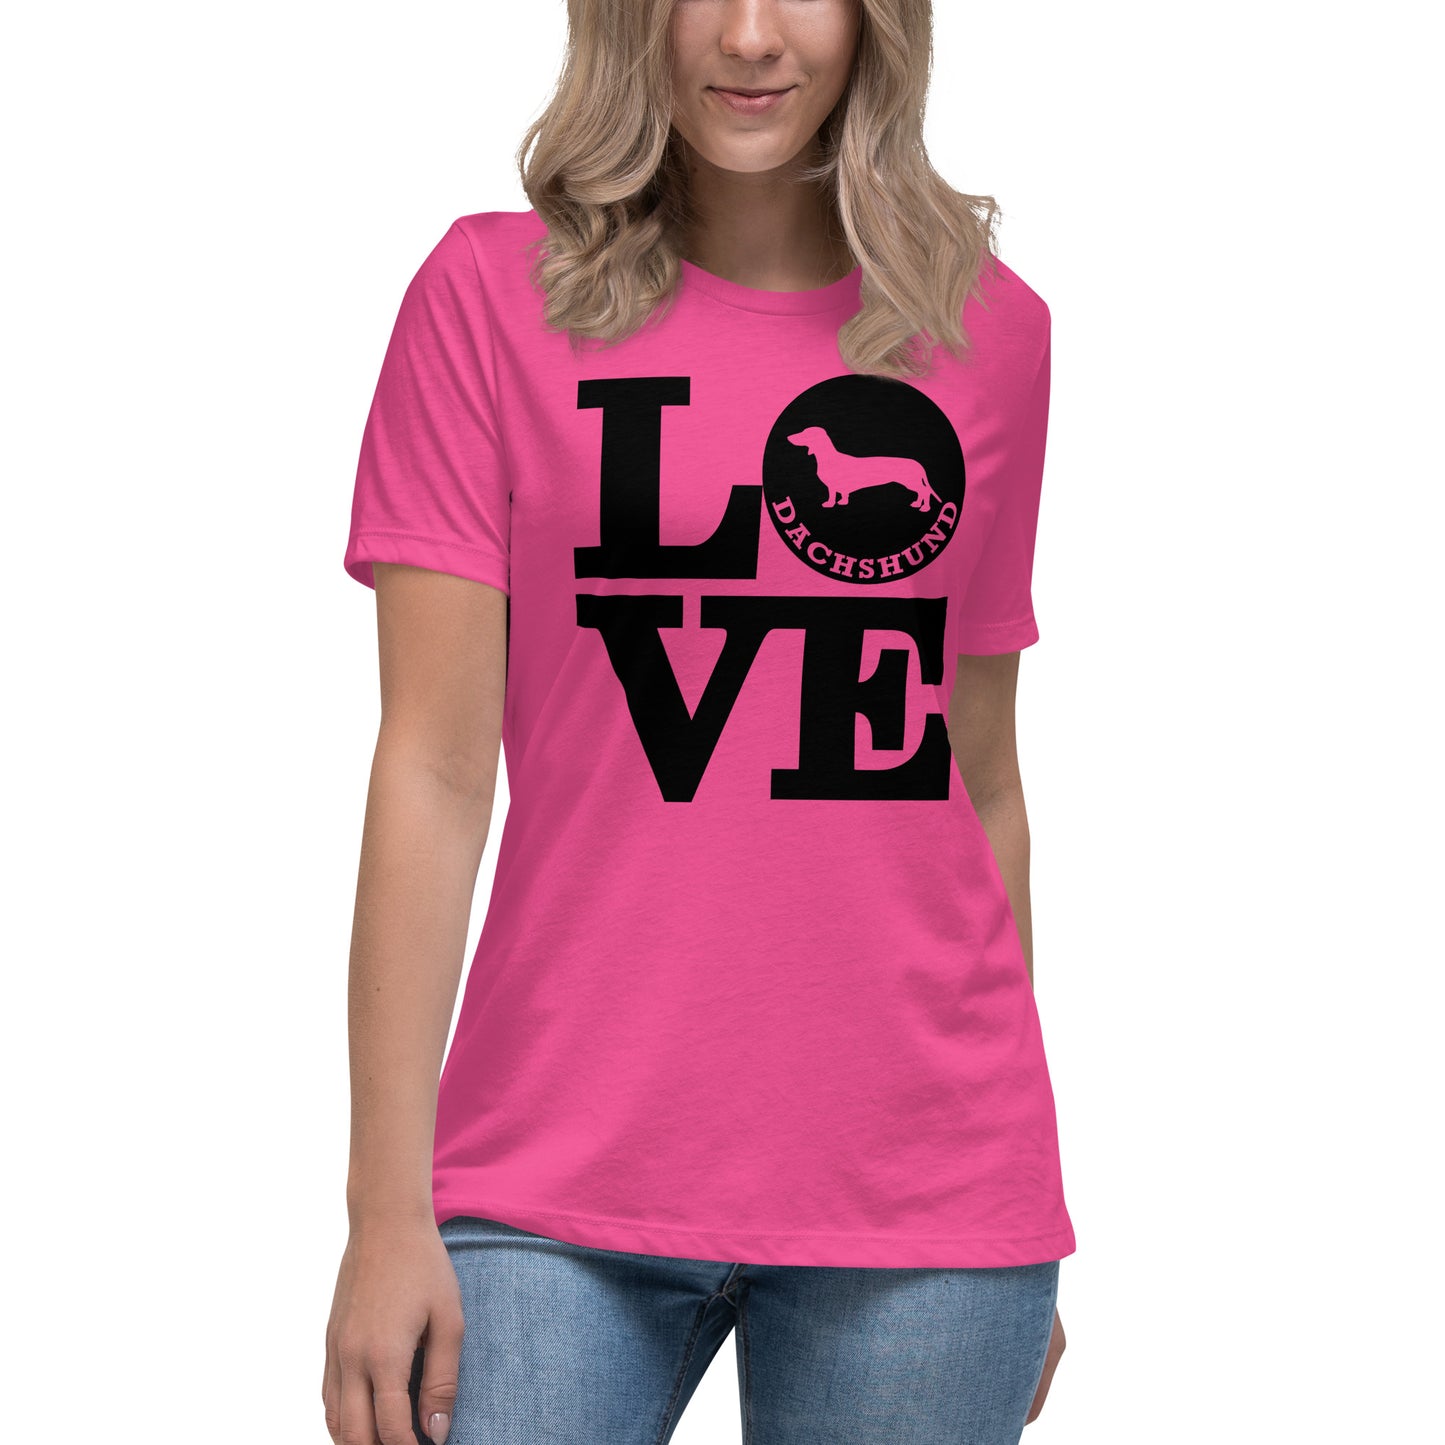 Love Dachshund Women's Relaxed T-Shirt